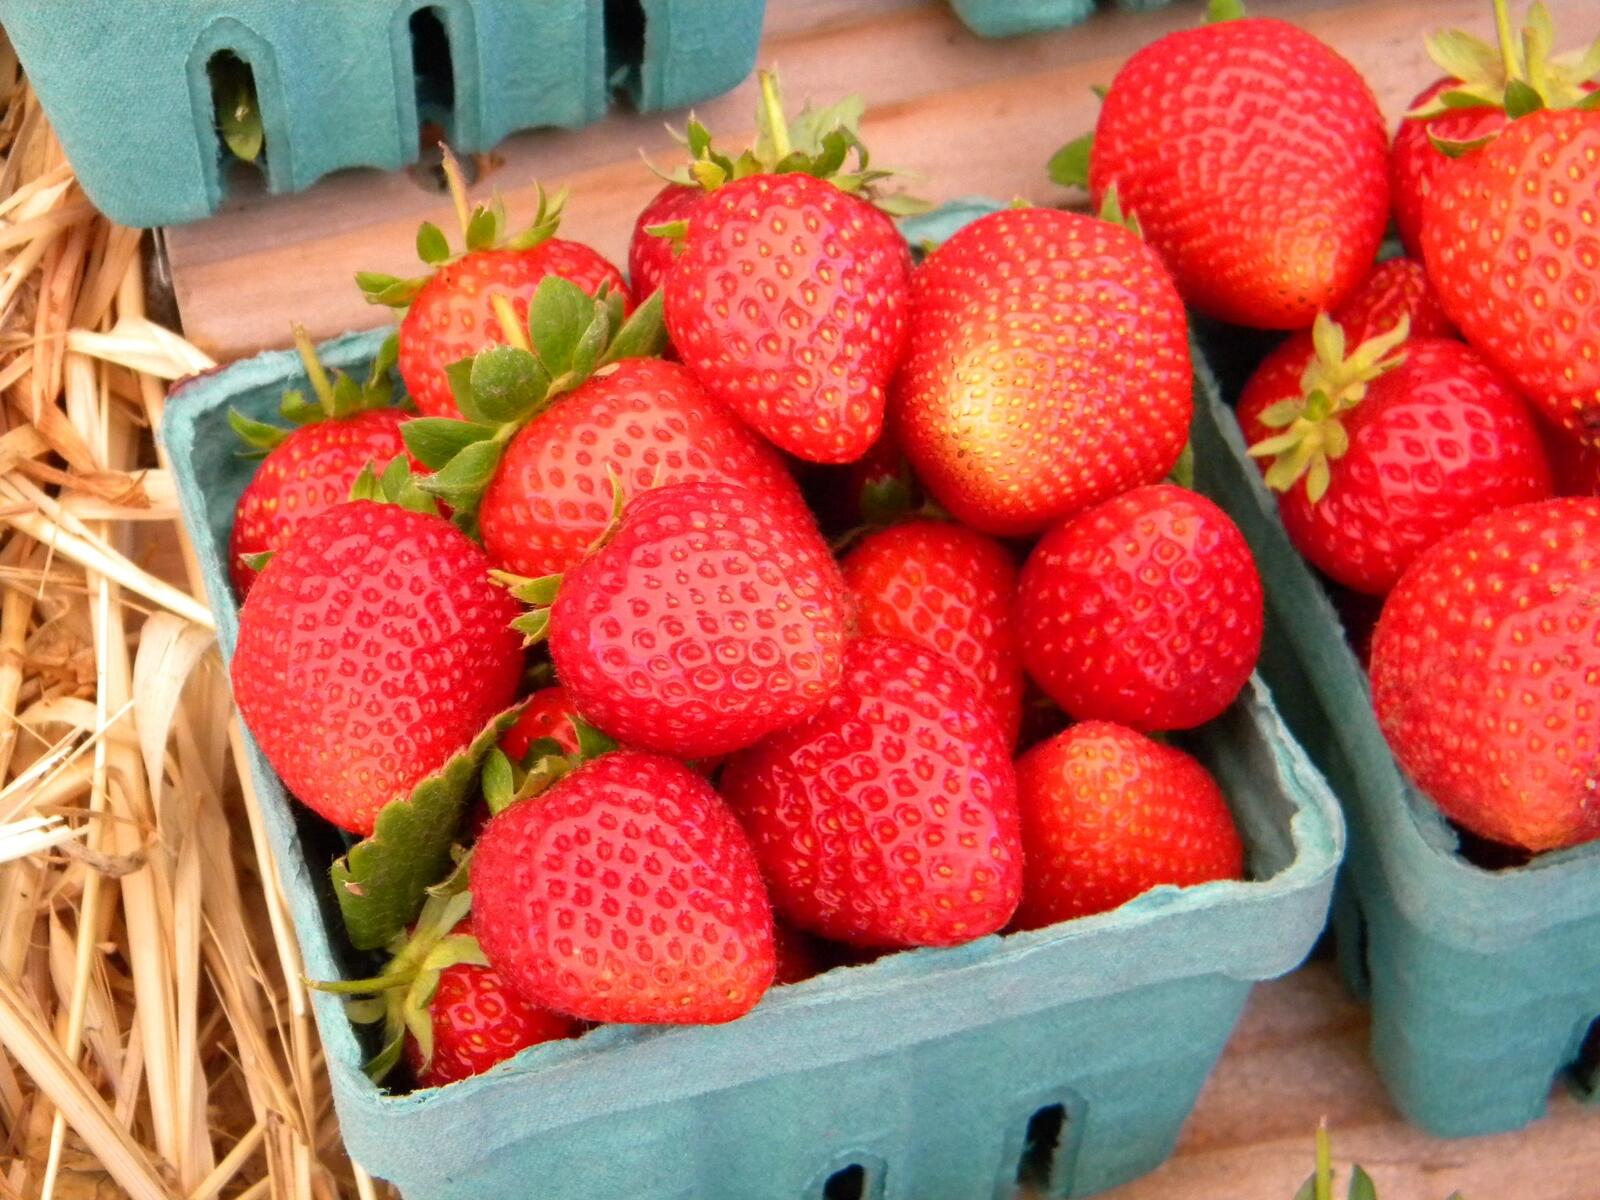 Wallpapers strawberry fruits basket on the desktop